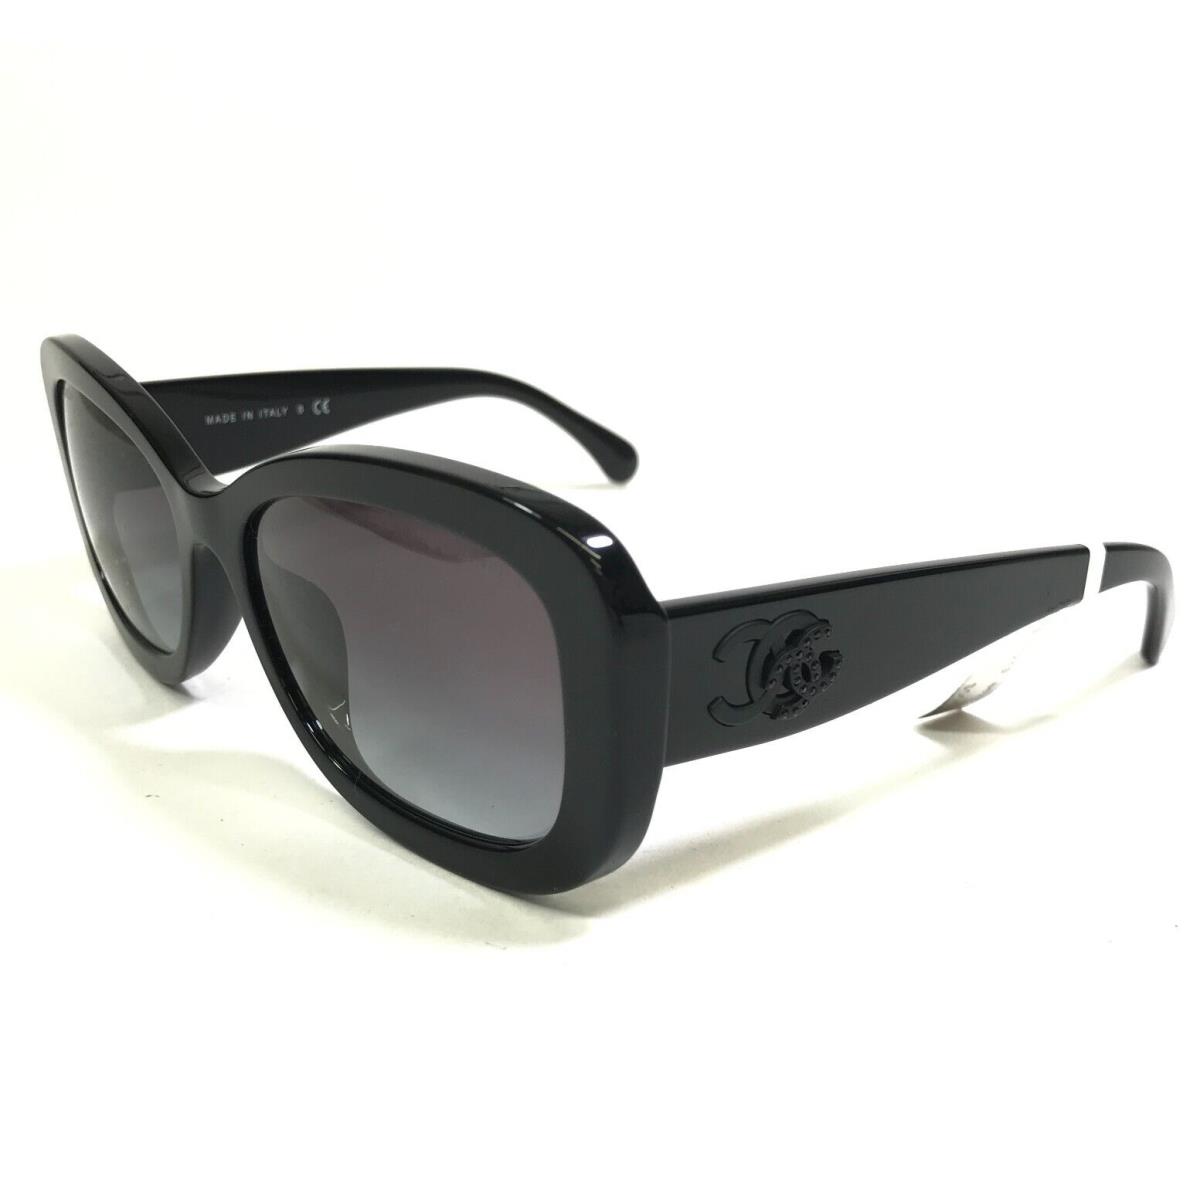 Chanel Sunglasses 5468-B-A c.888/S6 Black Cat Eye Frames with Purple Lenses